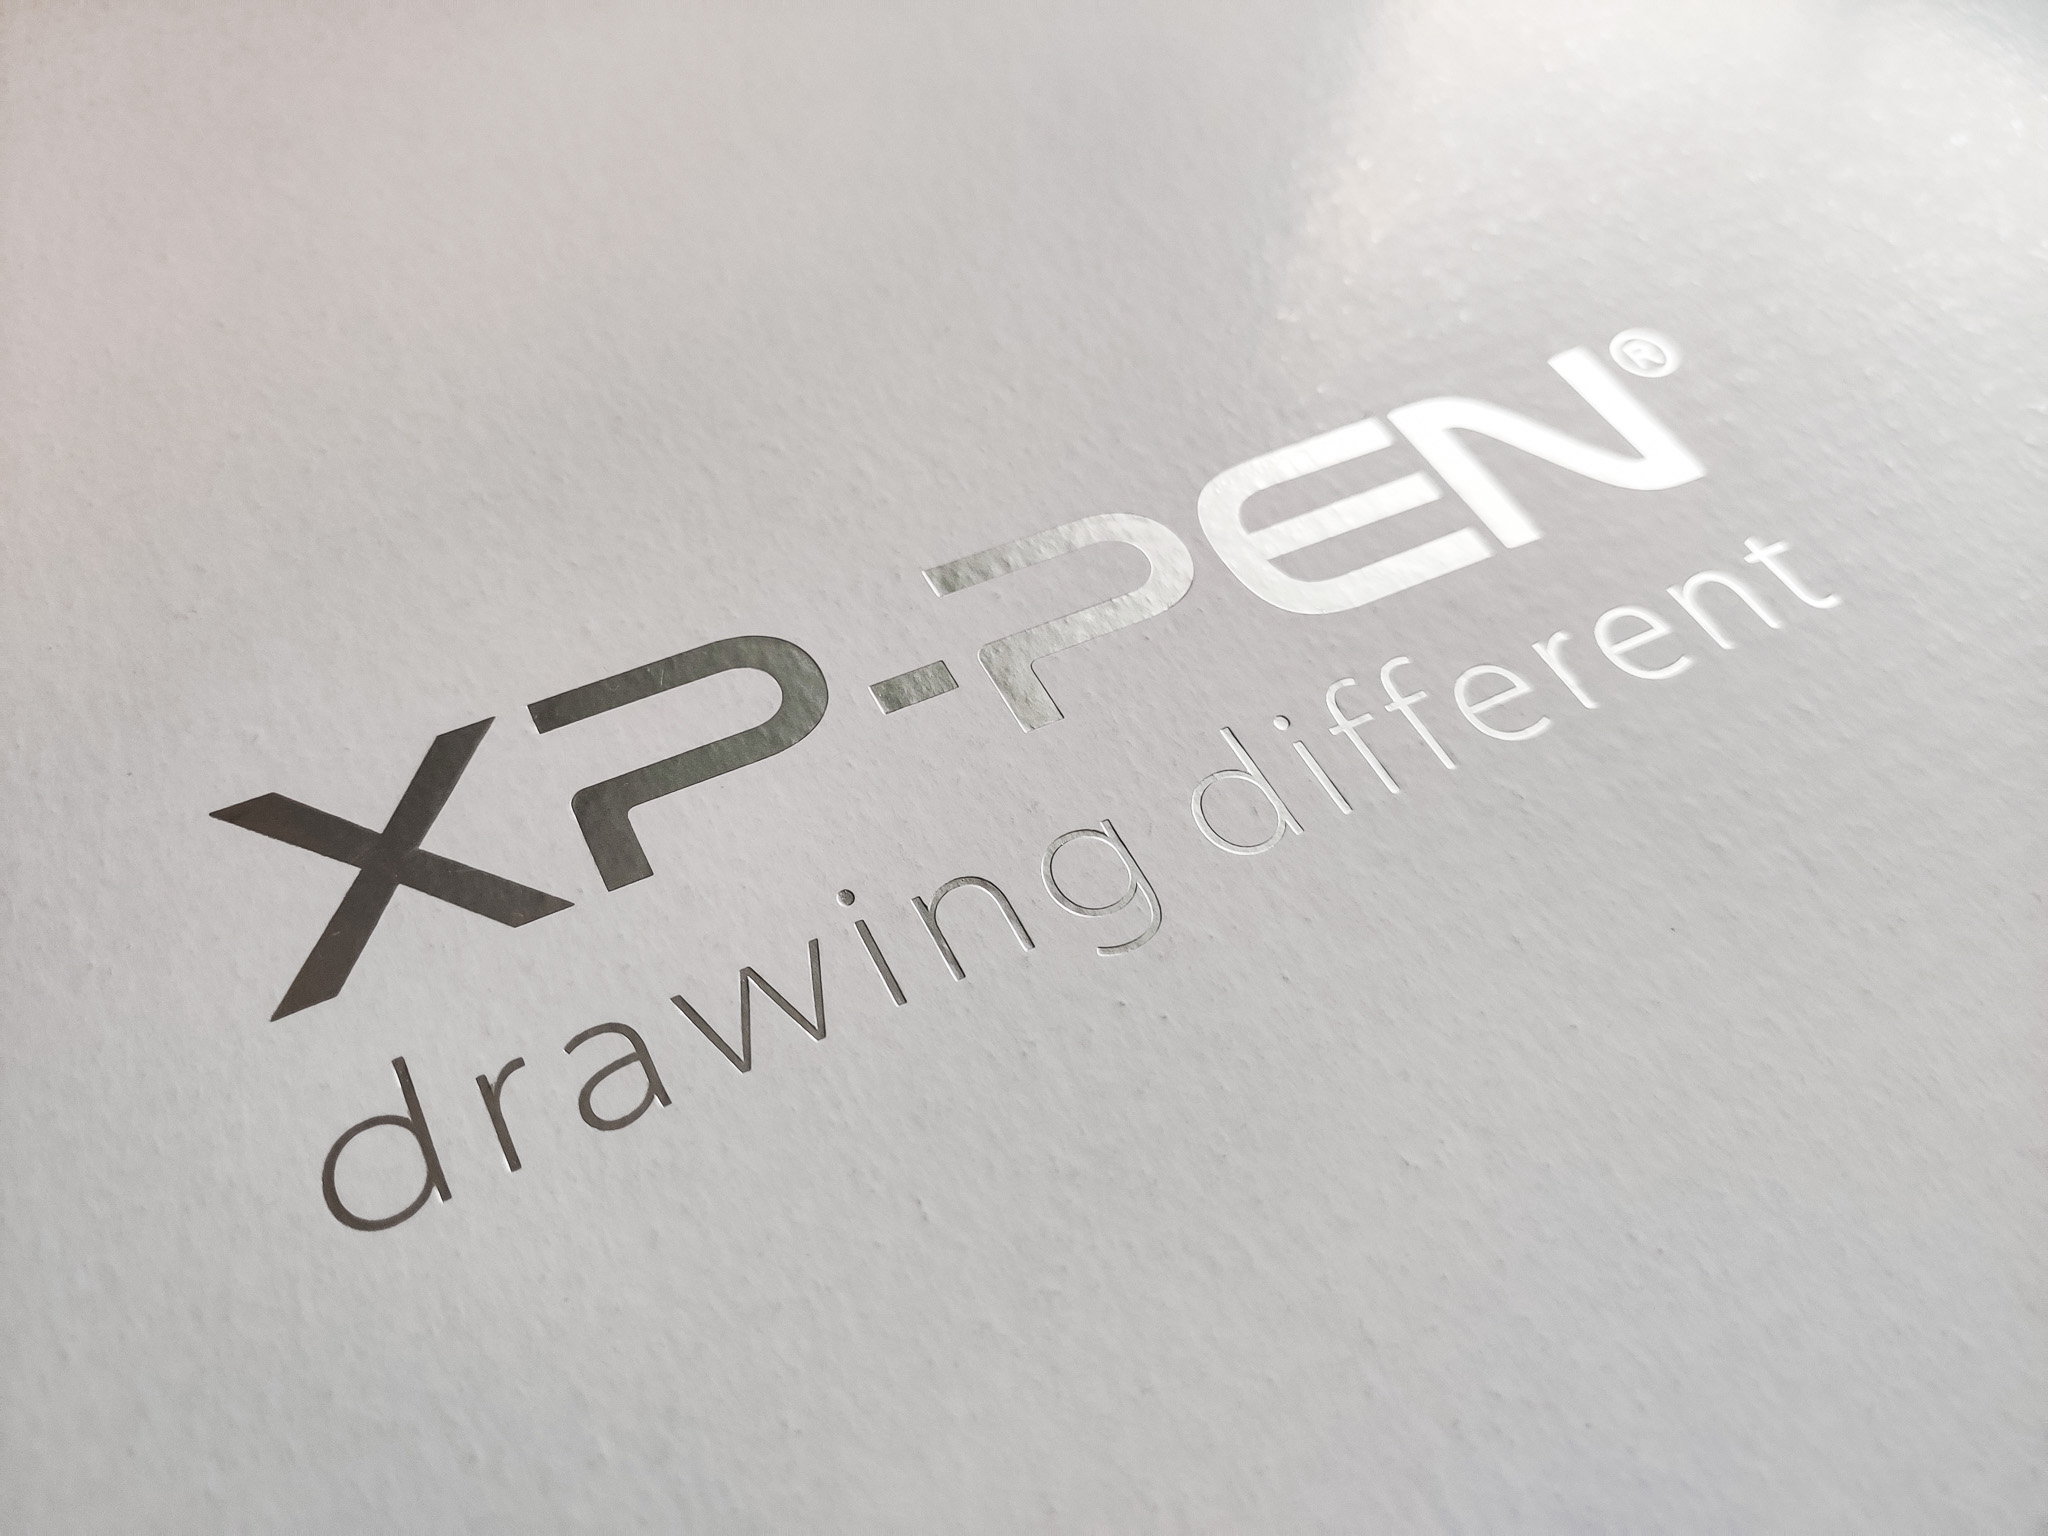 xp-pen-artist-15-6-for-photo-editing-03